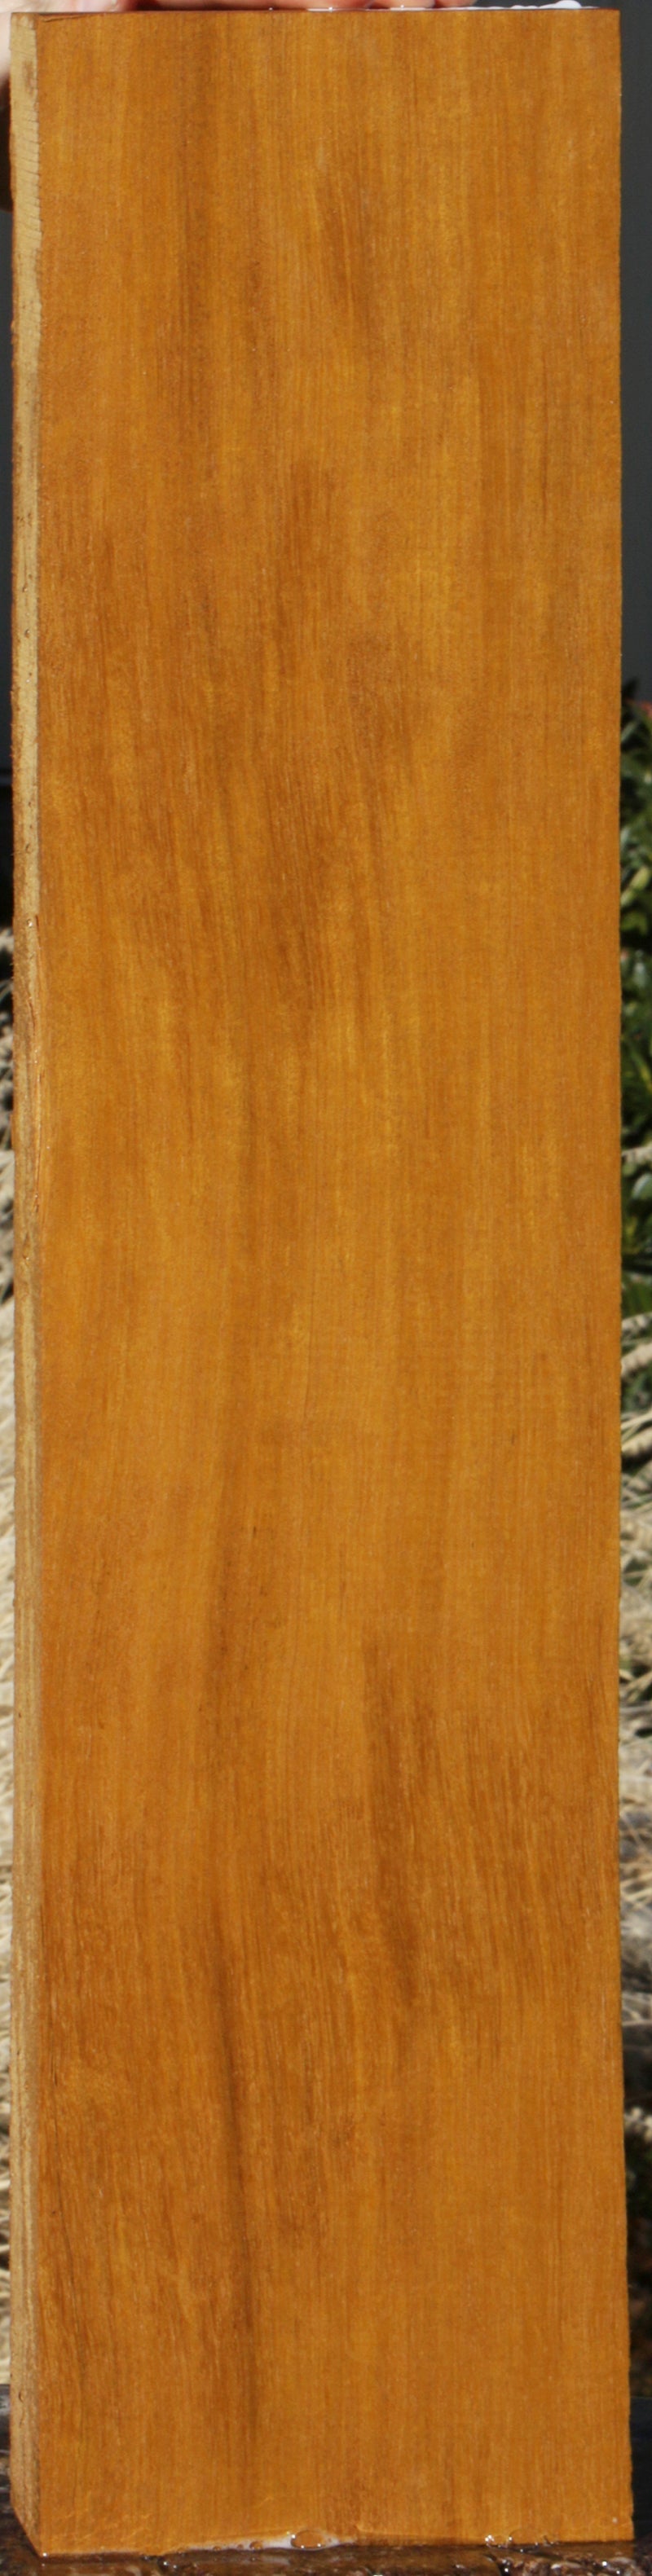 Piquiarana Micro Lumber